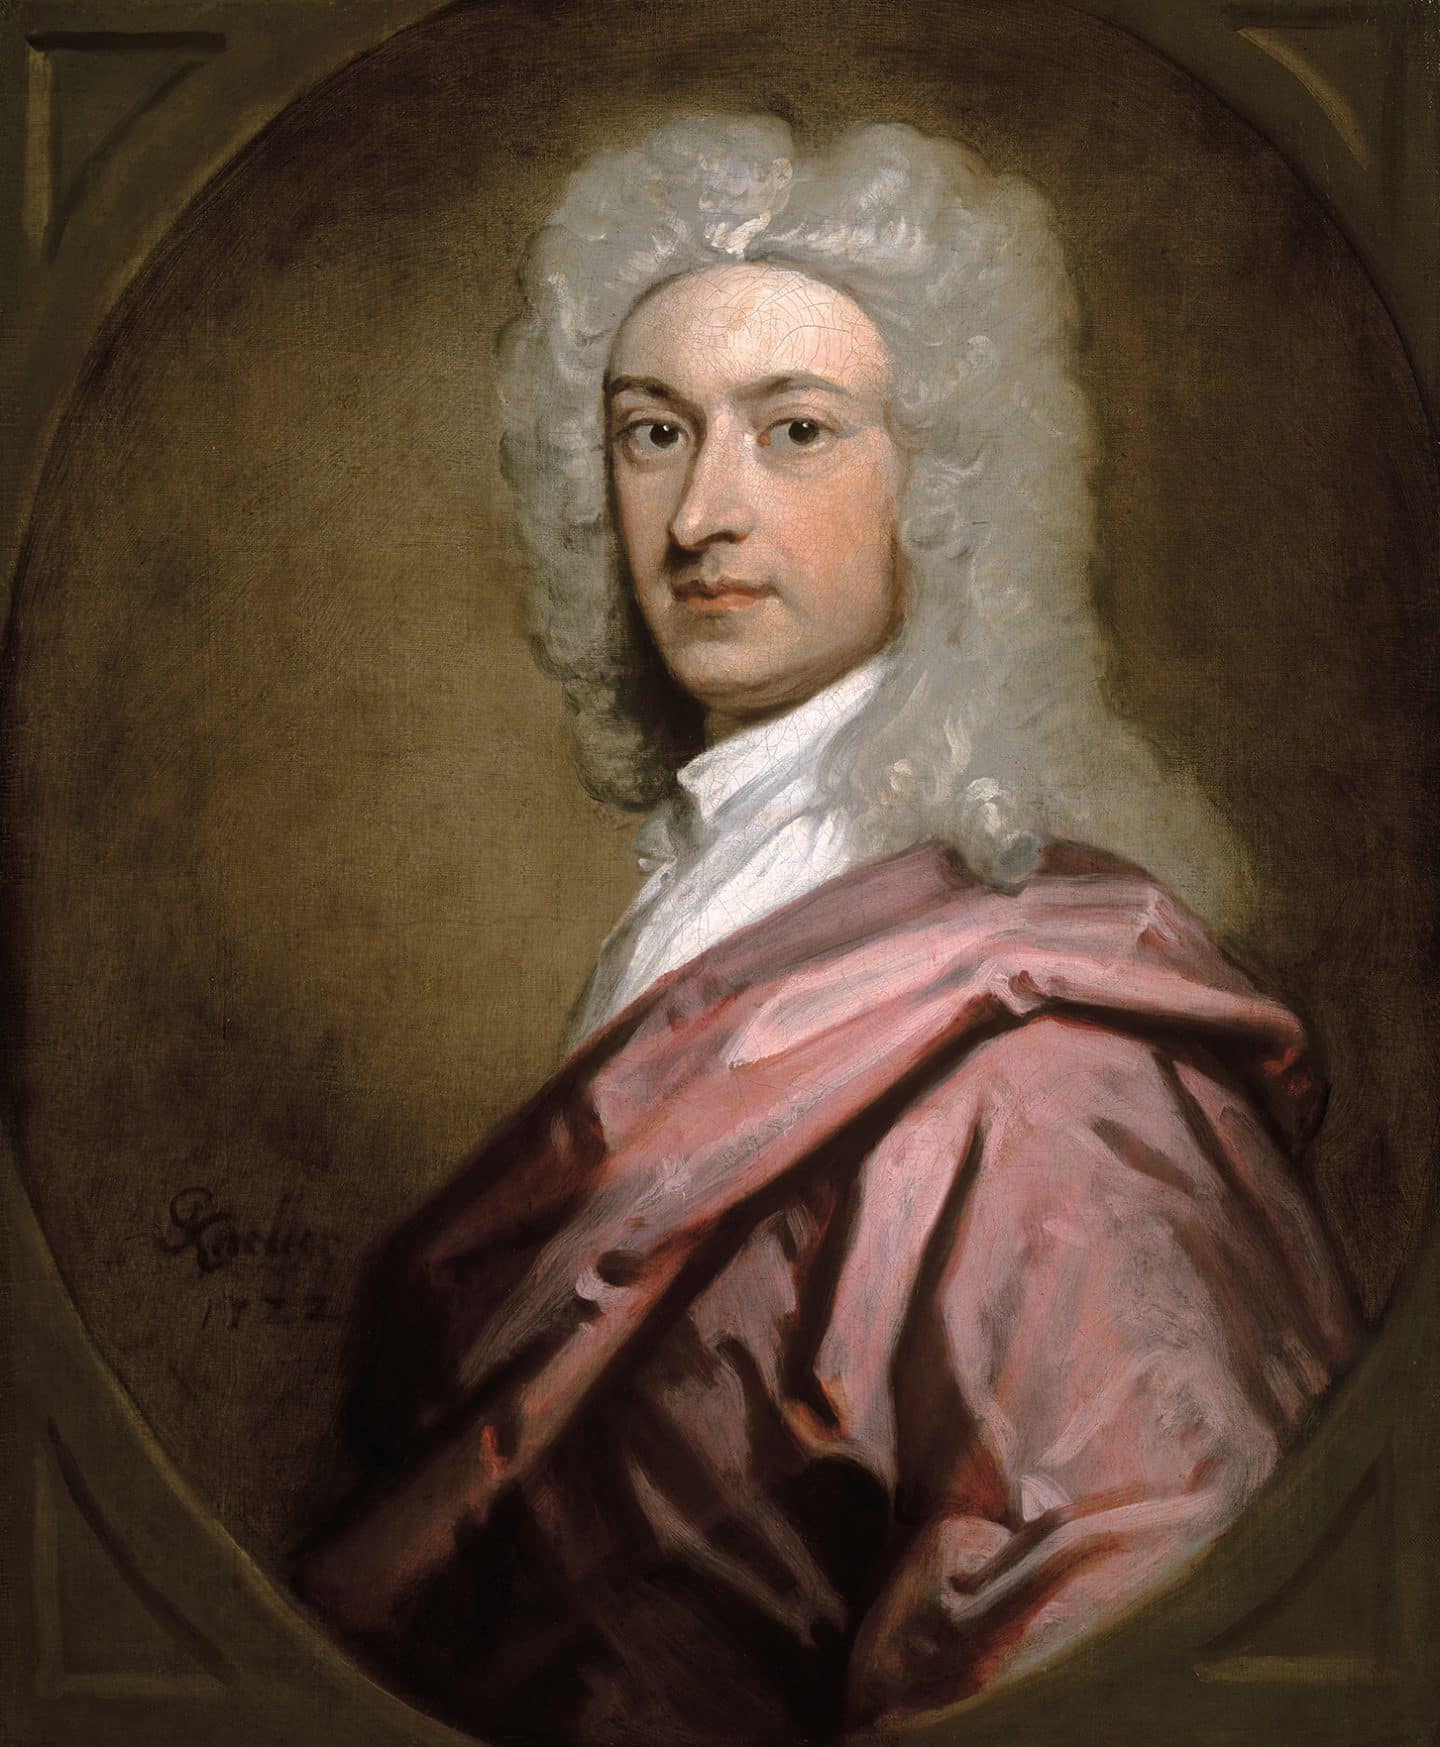 Godfrey Kneller, Portrait of a Man, 1722, oil on canvas. Gift of Alfred and Isabel Bader, 1991 (34-020.16) Photo: Bernard Clark